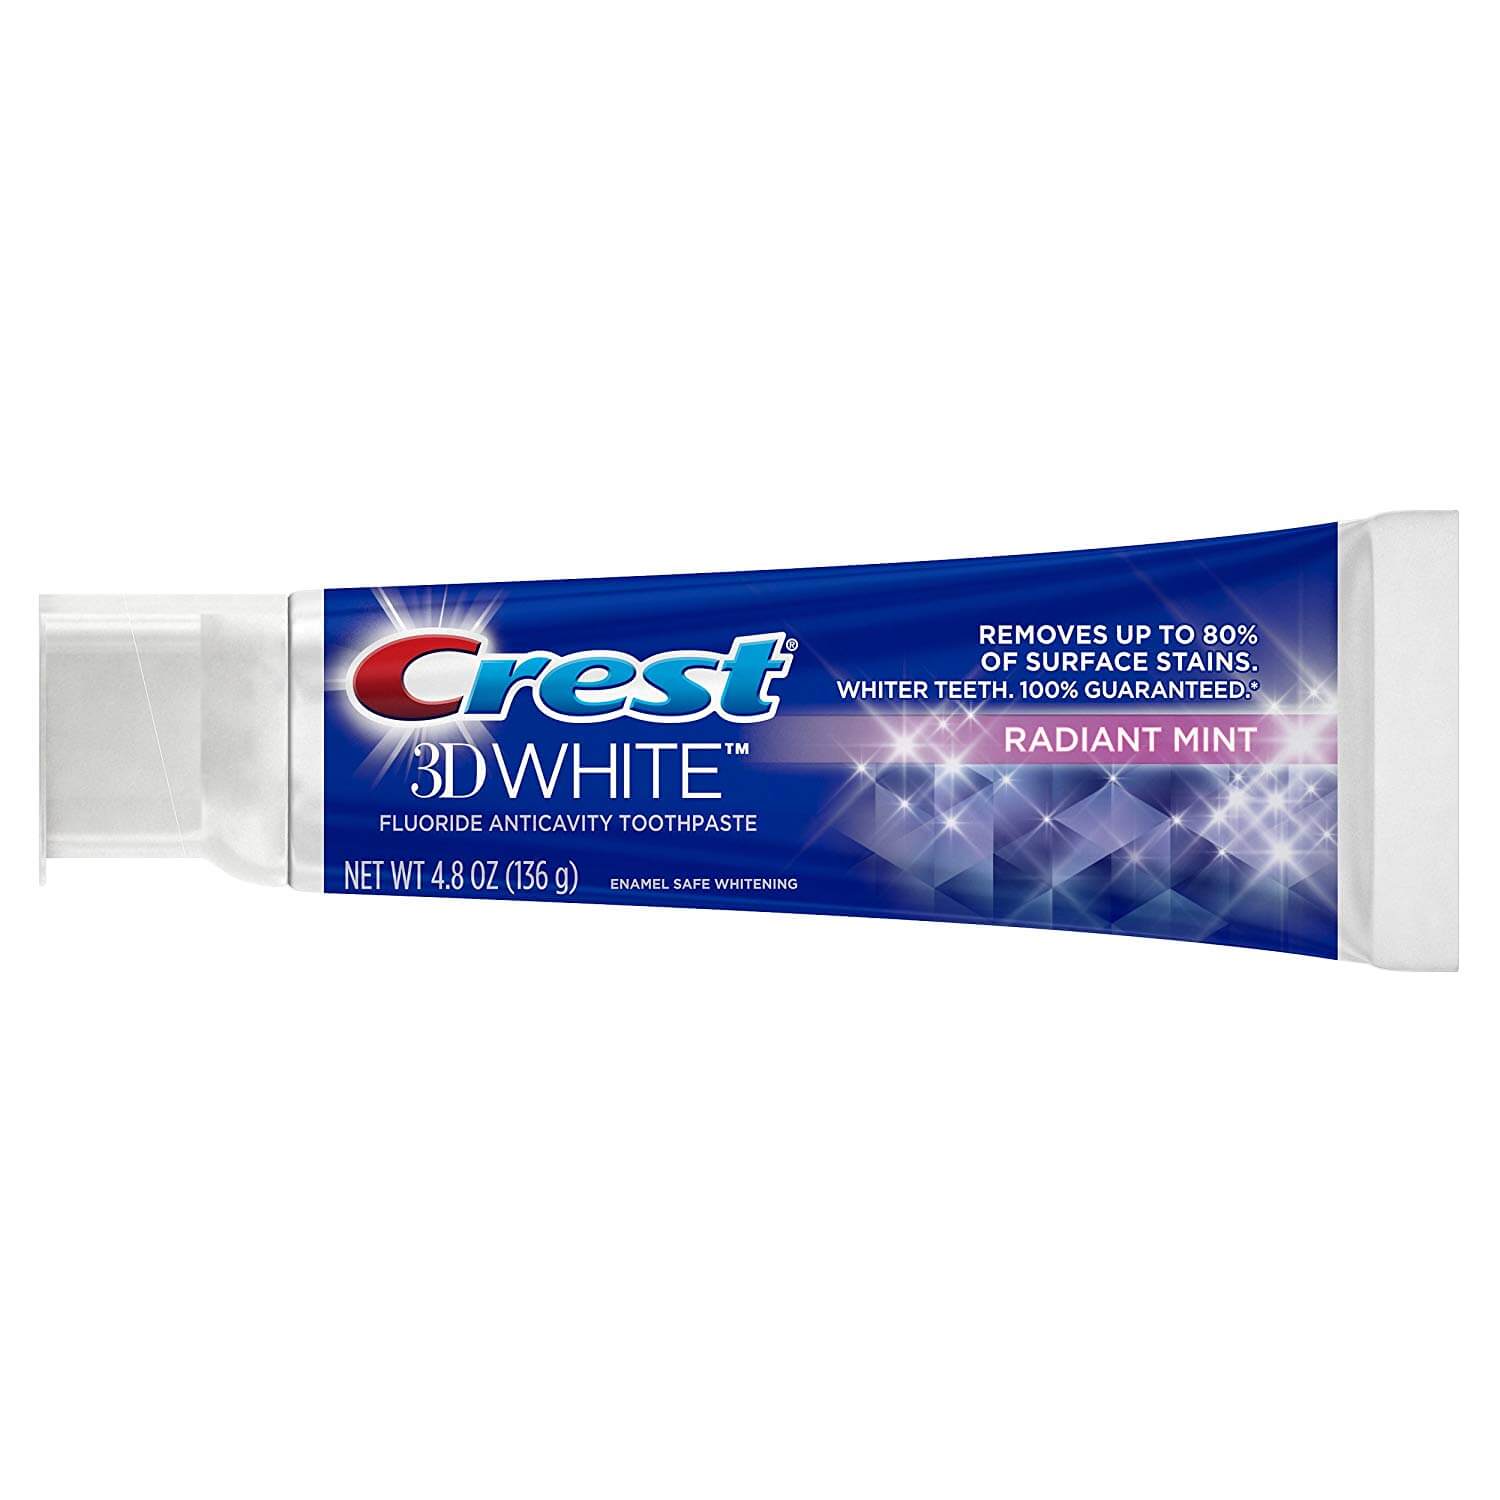 Crest Radiant Mint Whitening Toothpaste 4.8 oz